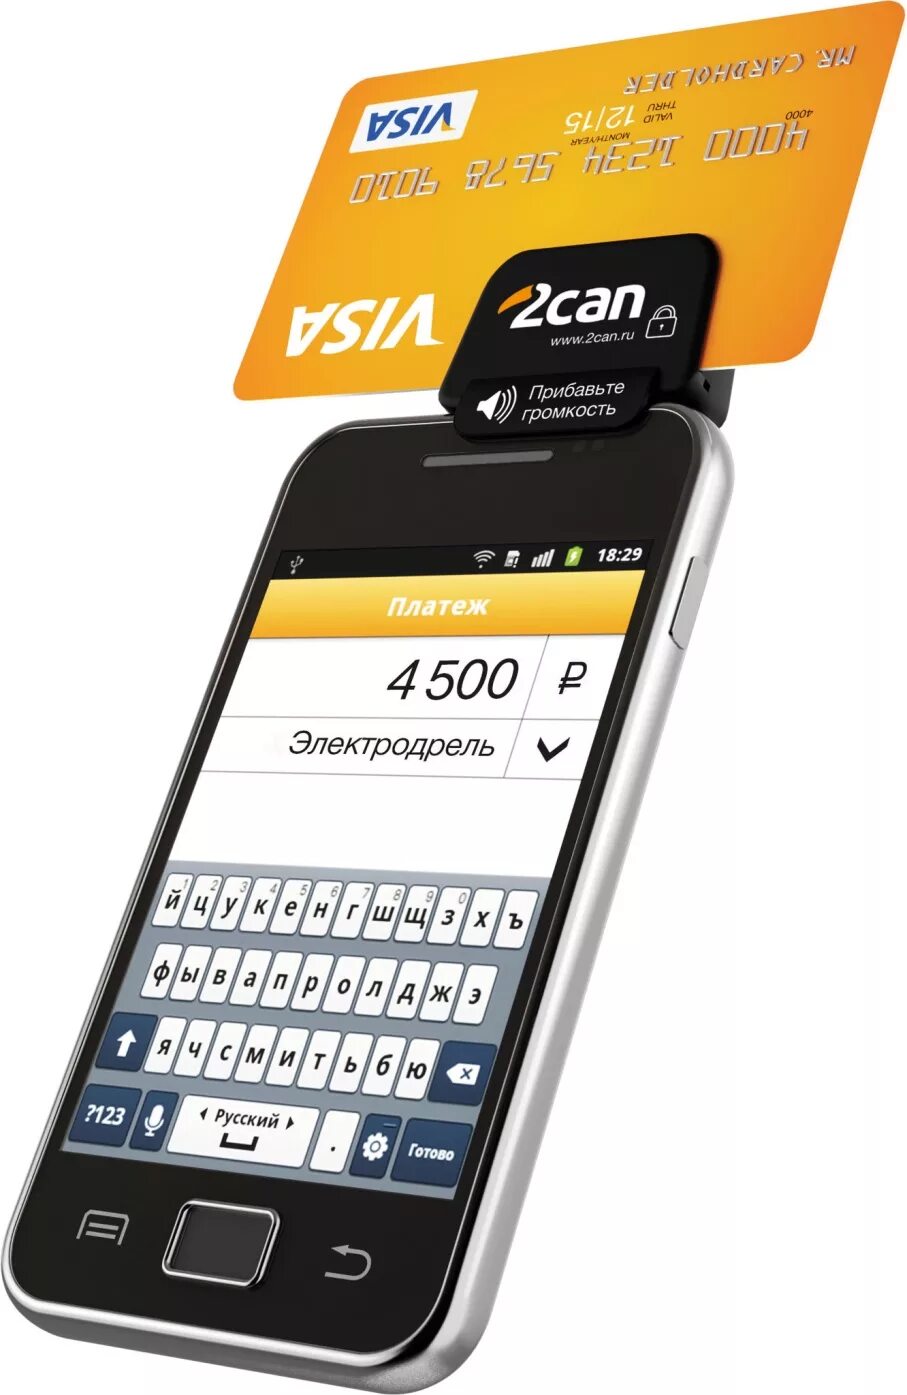 POS-терминал 2can v20. Платежный терминал 2can. Мобильный терминал эквайринга. 2can терминал. Мобильный платежный терминал телефон